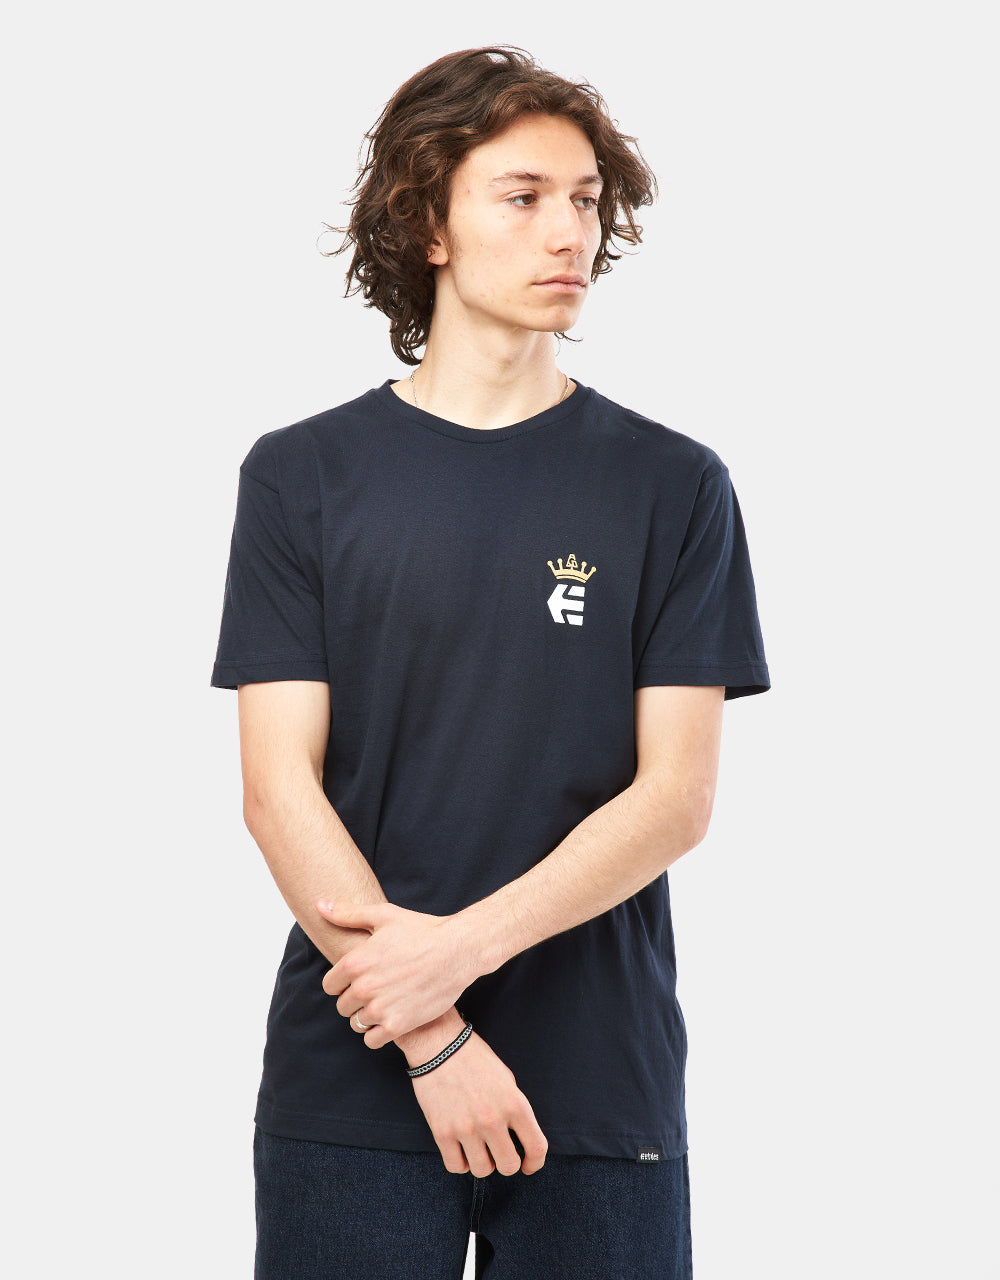 Etnies AG T-Shirt - Navy